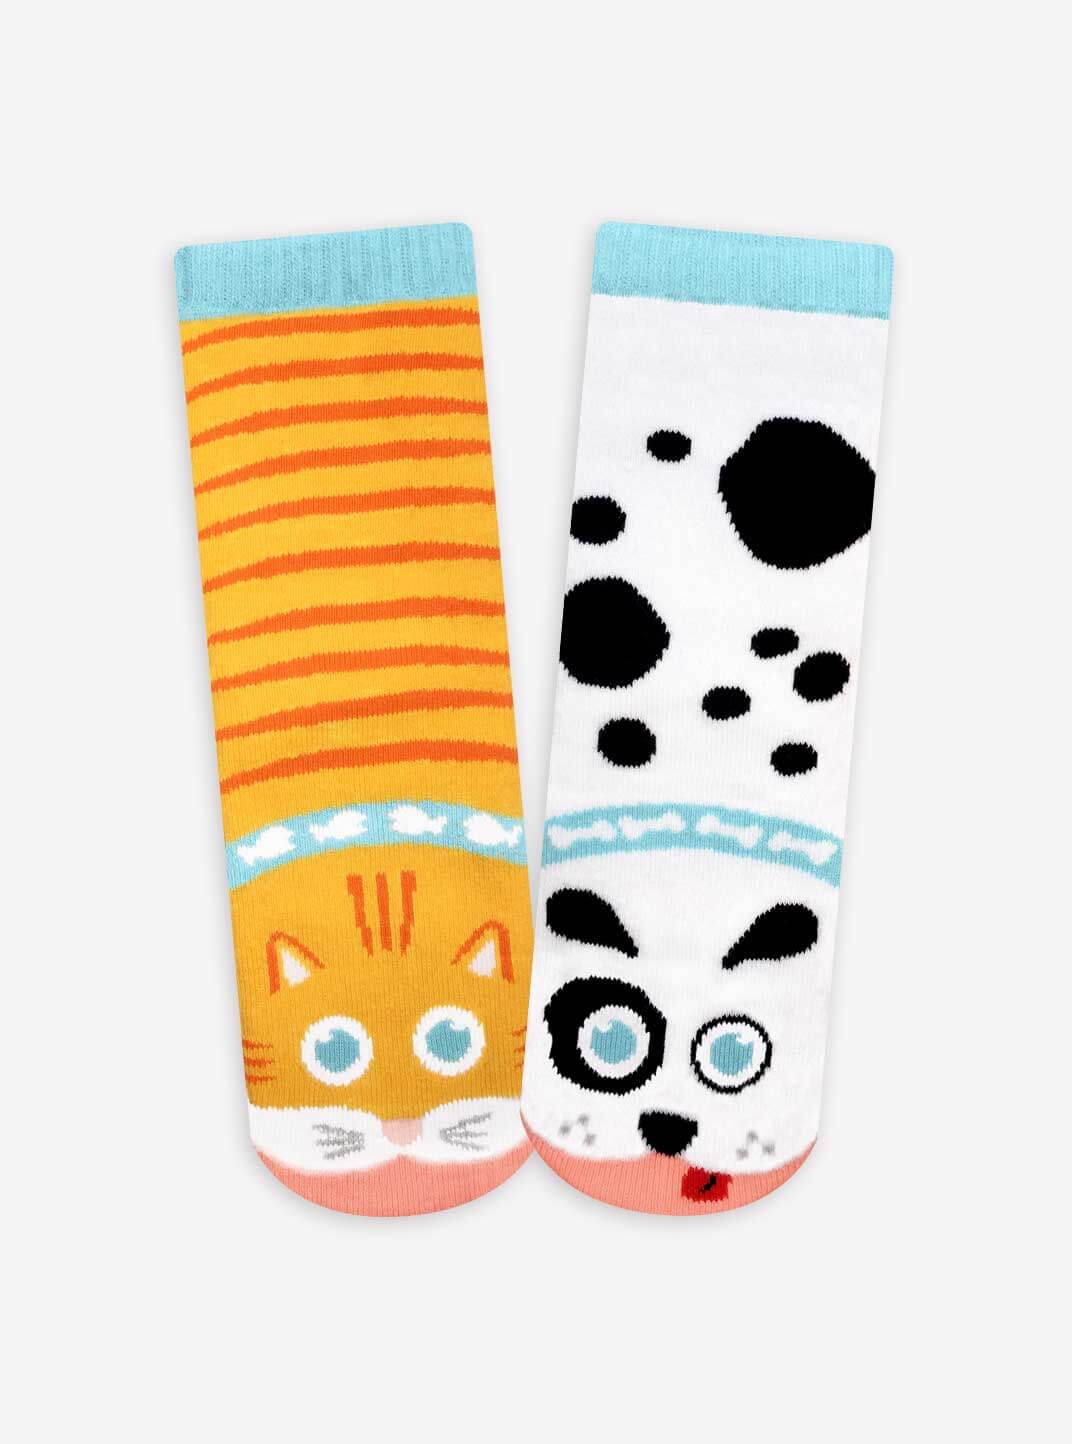 Cat & Dog | Kids Socks | Collectible Mismatched Crazy Socks